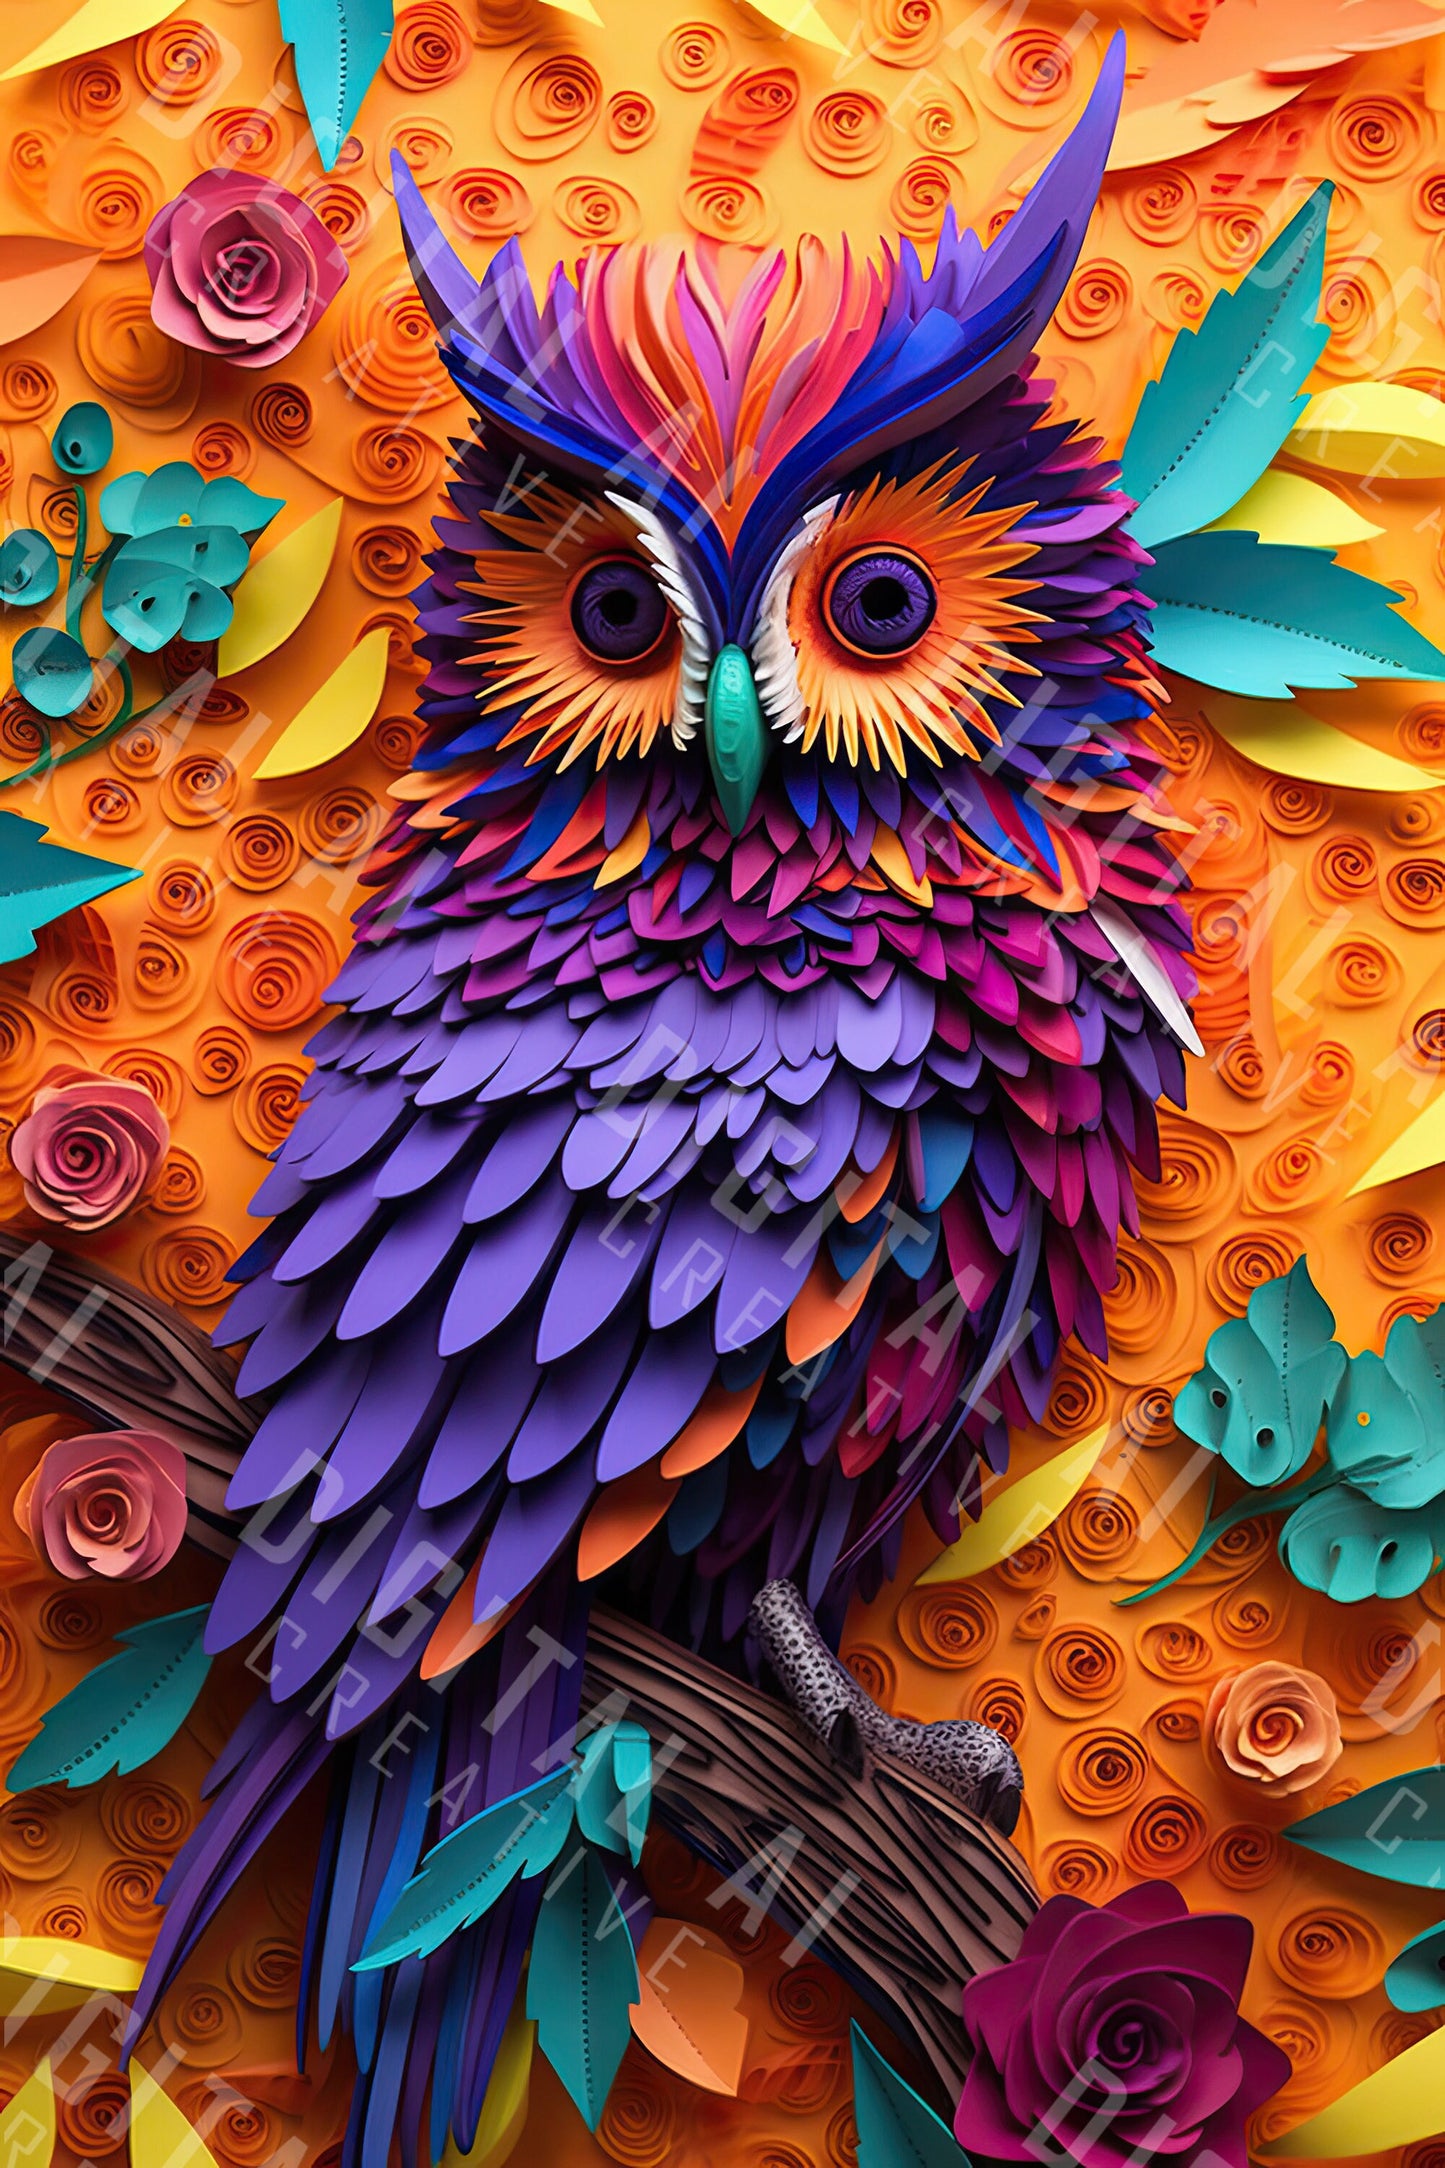 Digital Illustration Package - X7 Owl Quill Paper - 5376 x 8064 @300DPI